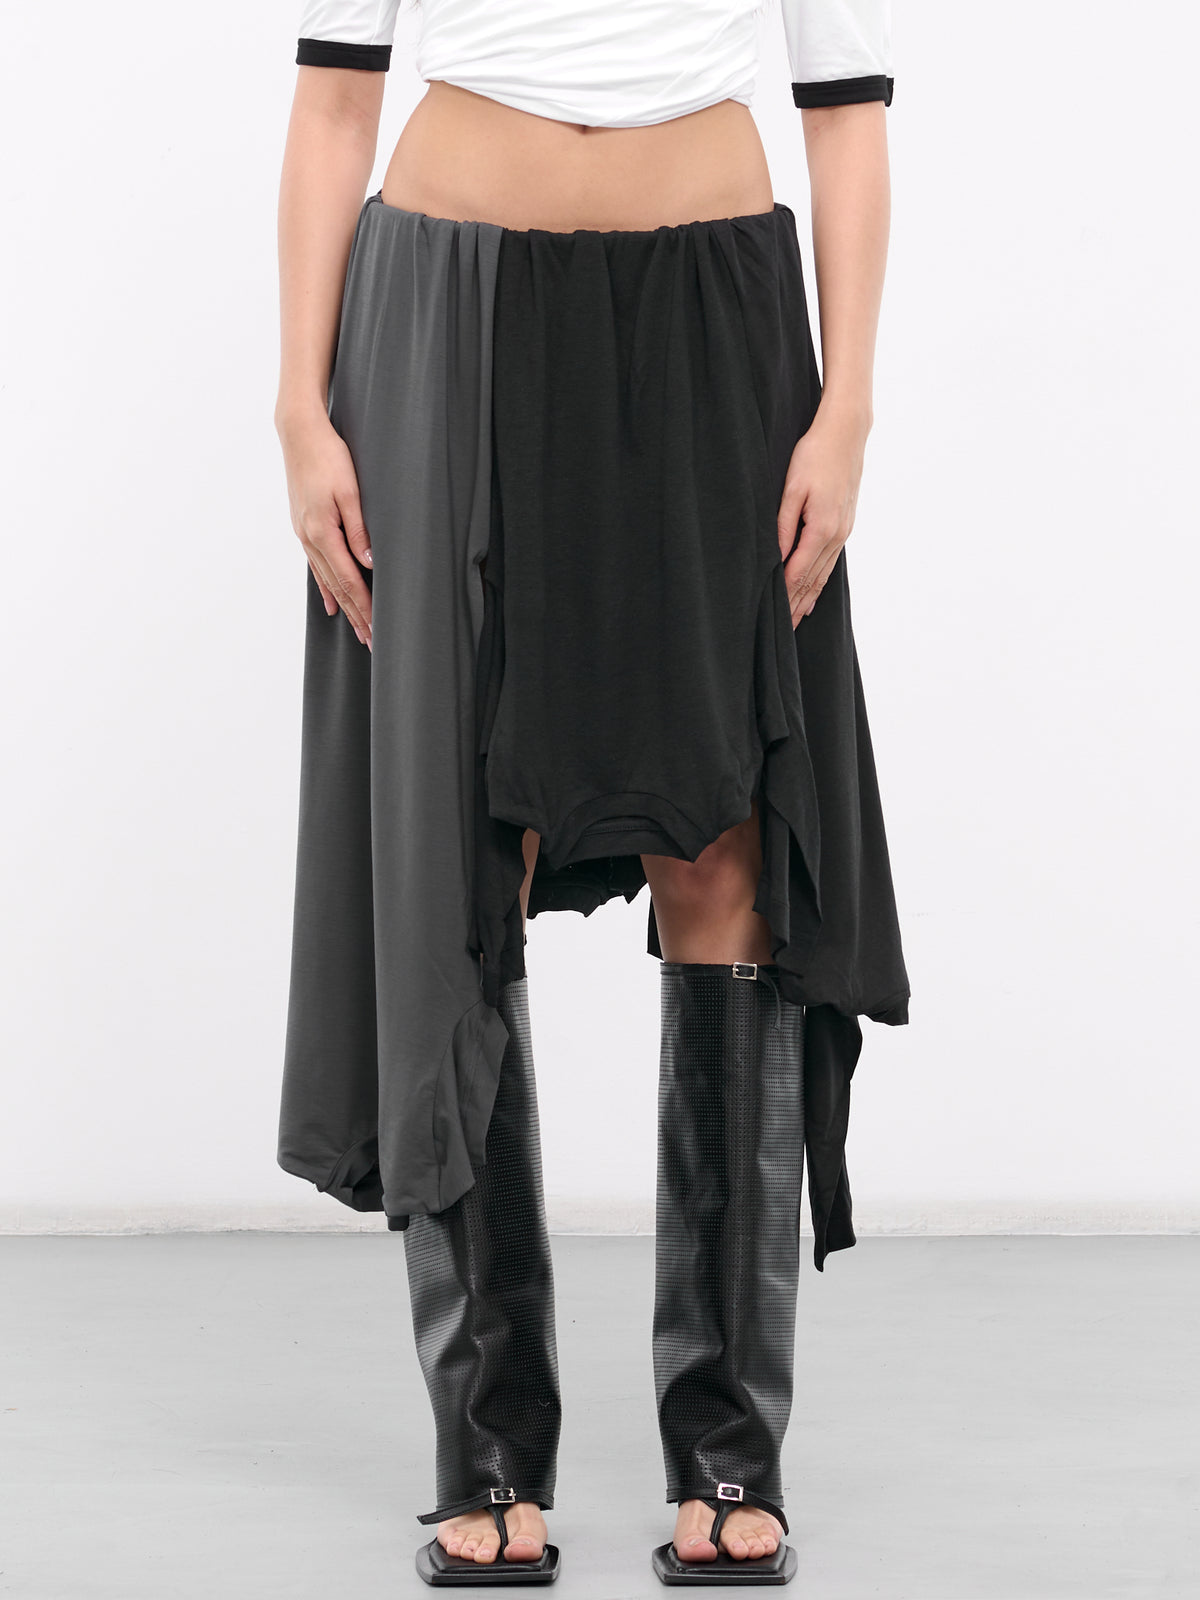 Layered Skirt (AF0460-ANTHRACITE-GREY0